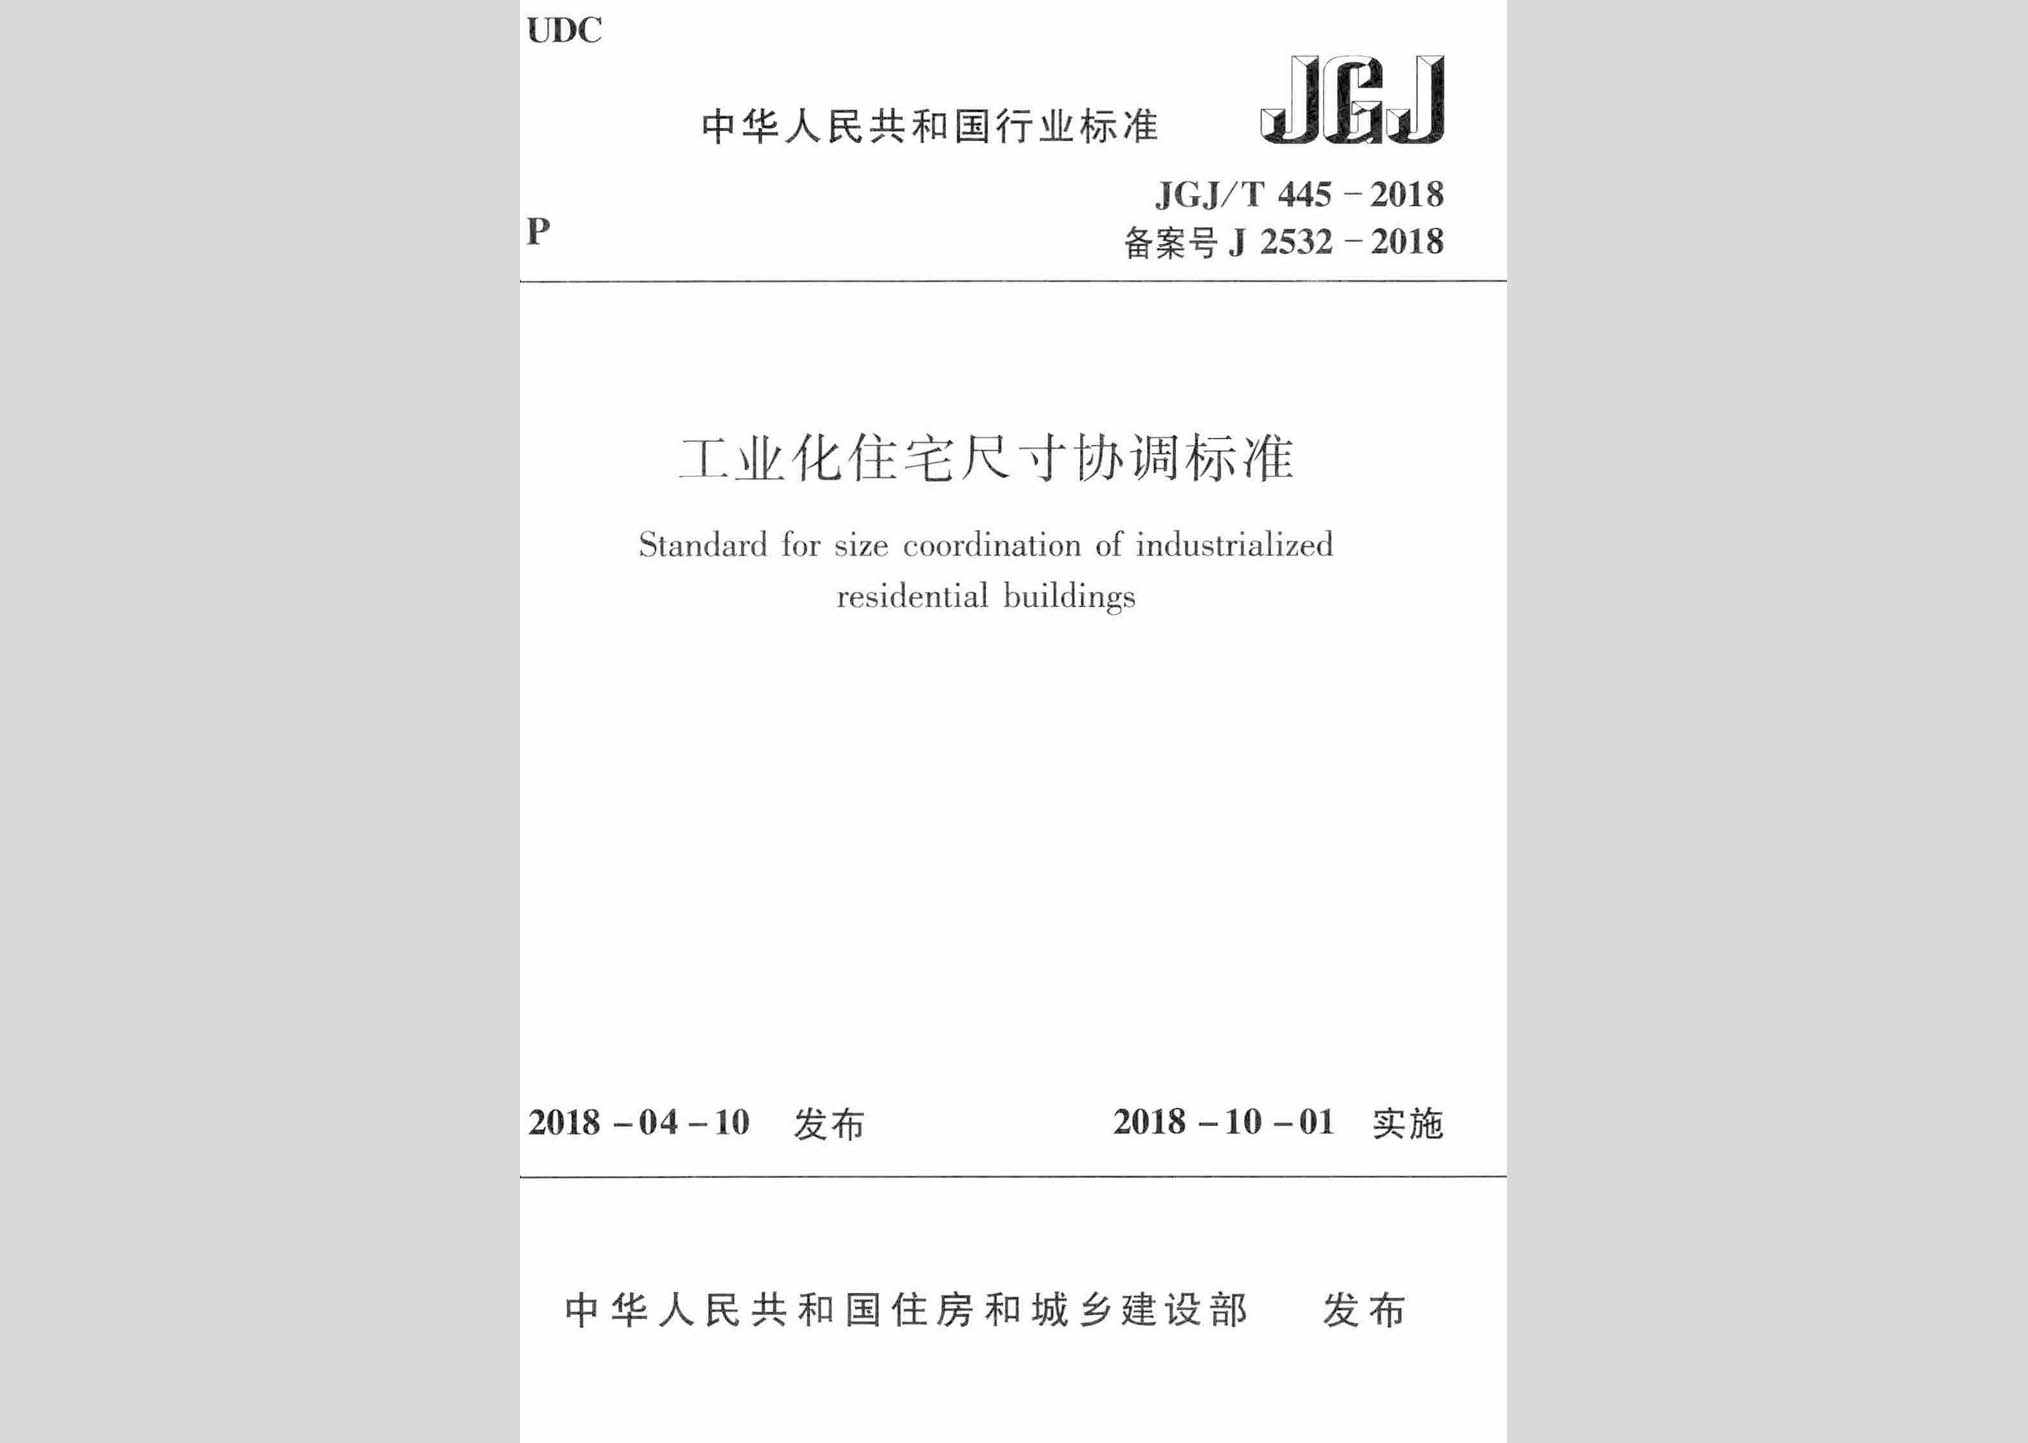 JGJ/T445-2018：工业化住宅尺寸协调标准